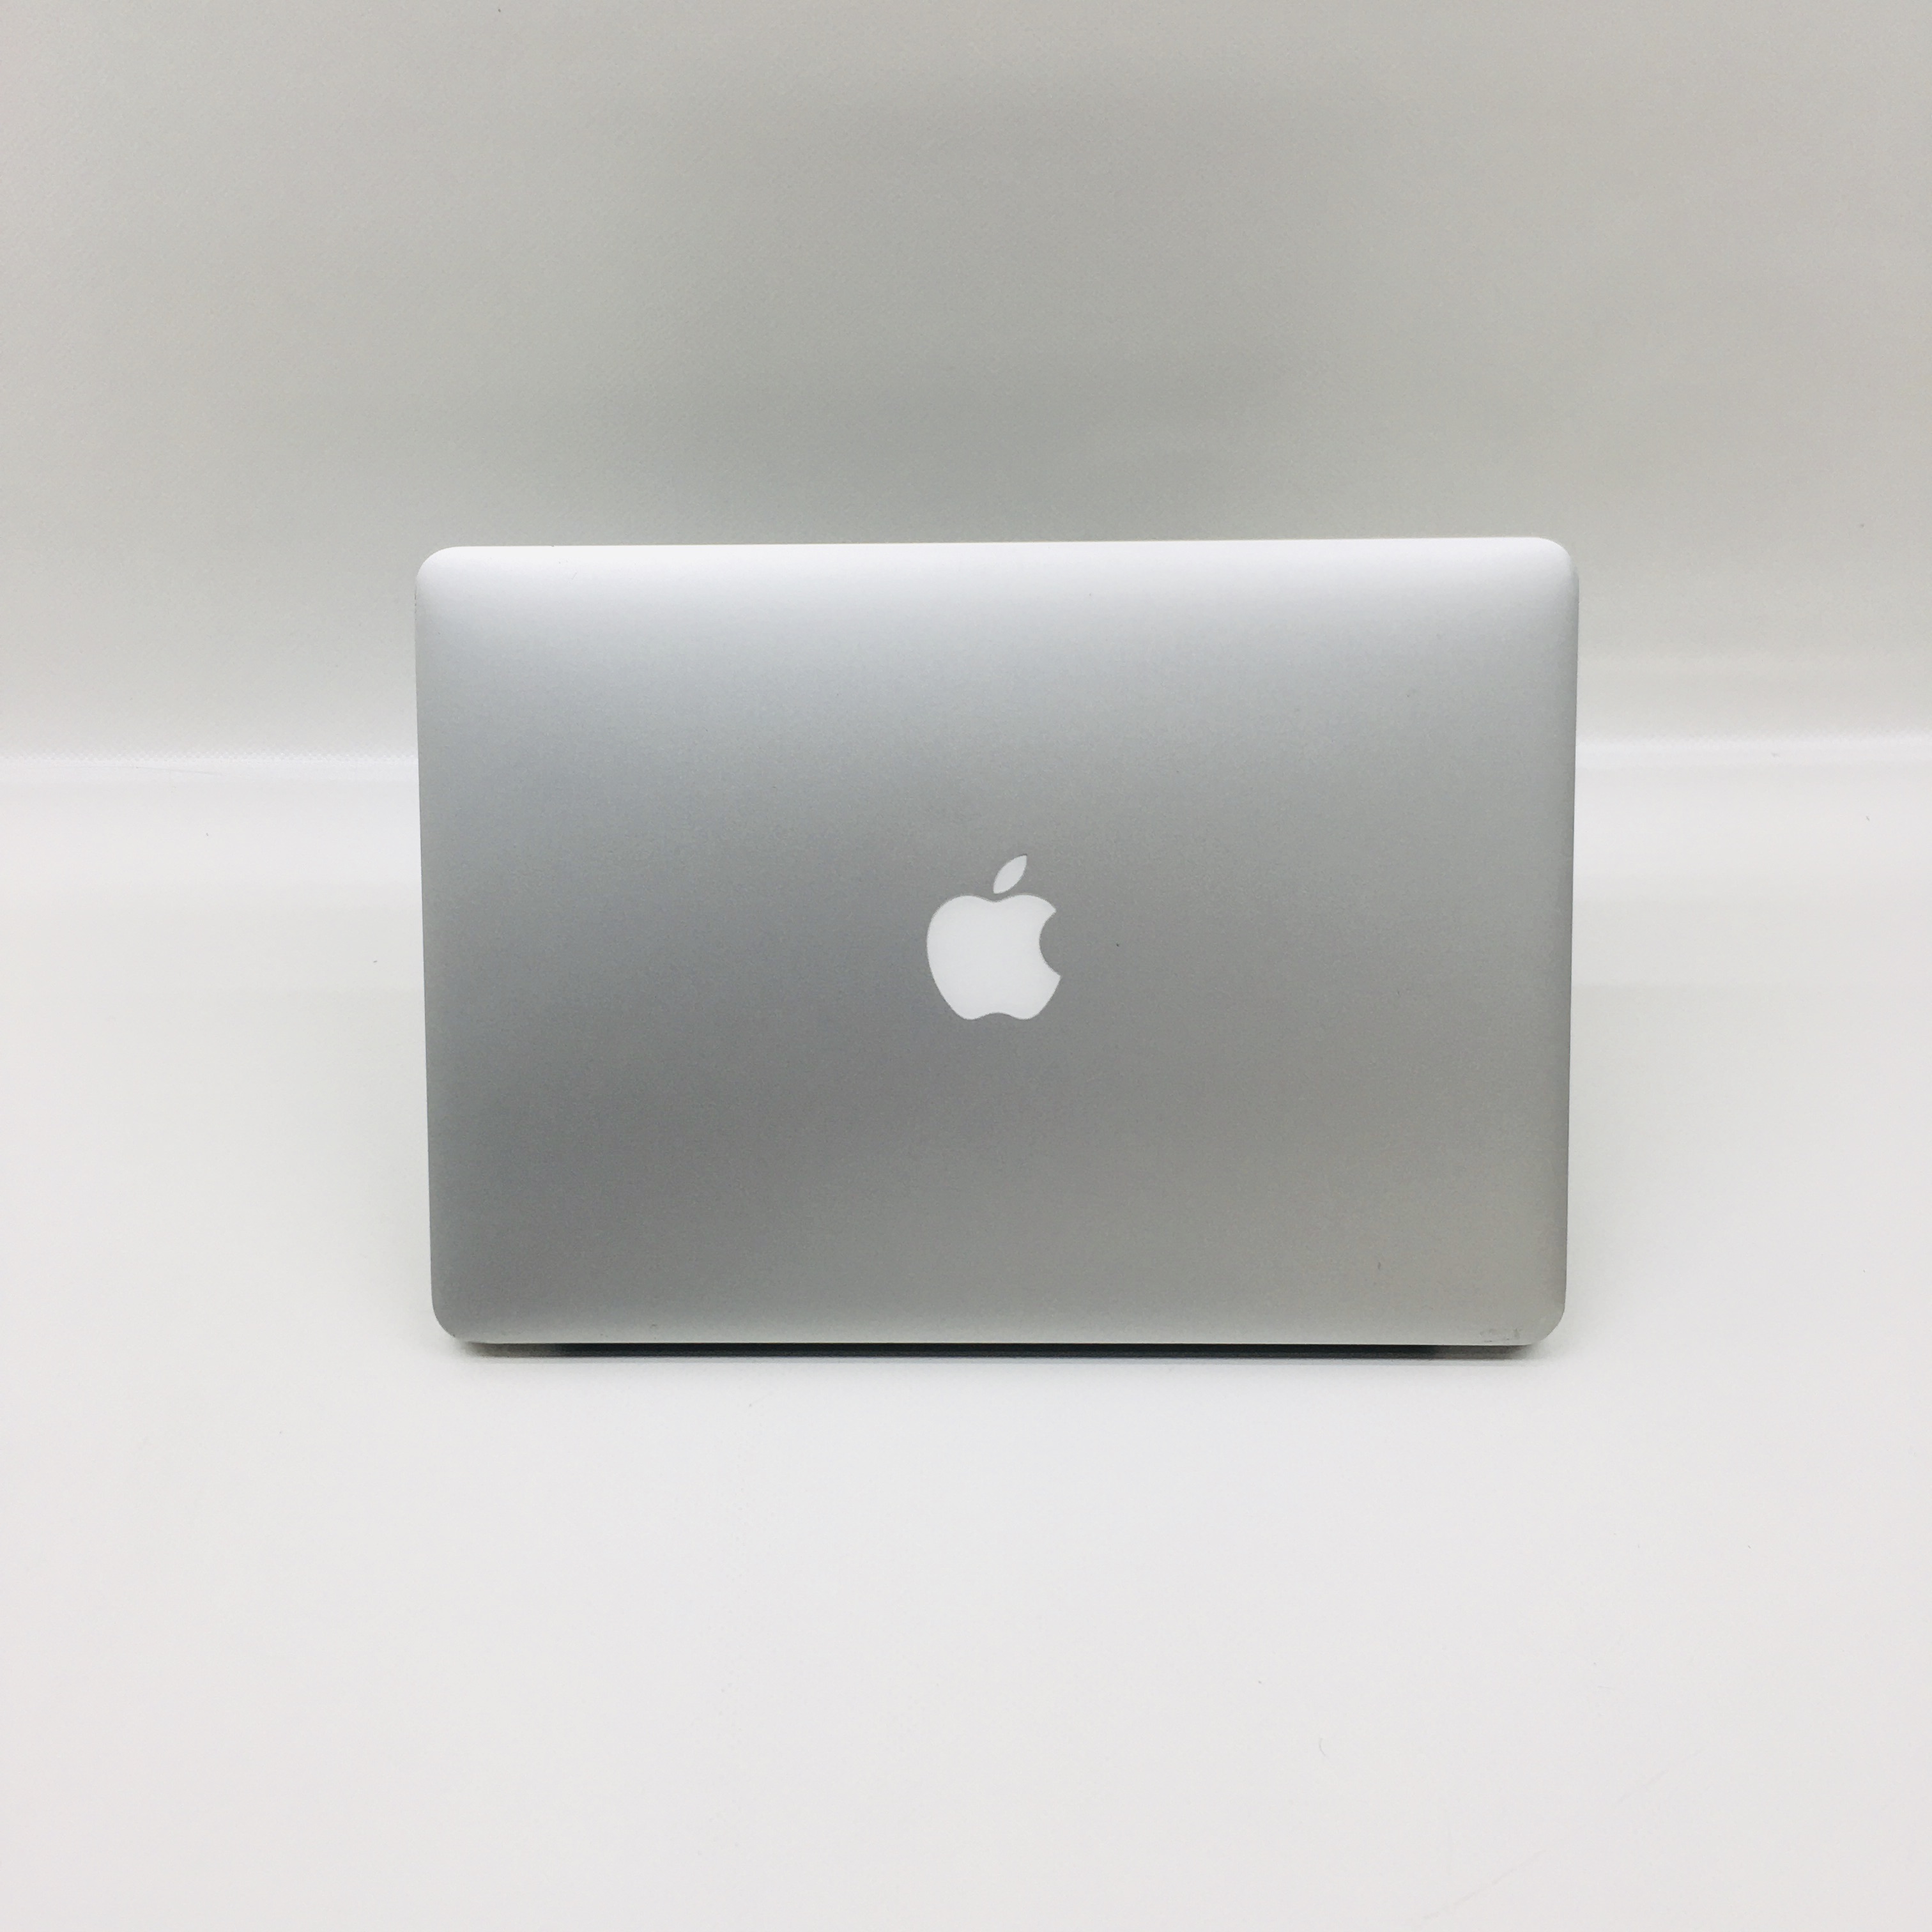 MacBook Air 13" Early 2014 (Intel Core i5 1.4 GHz 4 GB RAM 128 GB SSD), Intel Core i5 1.4 GHz, 4 GB RAM, 128 GB SSD, image 4